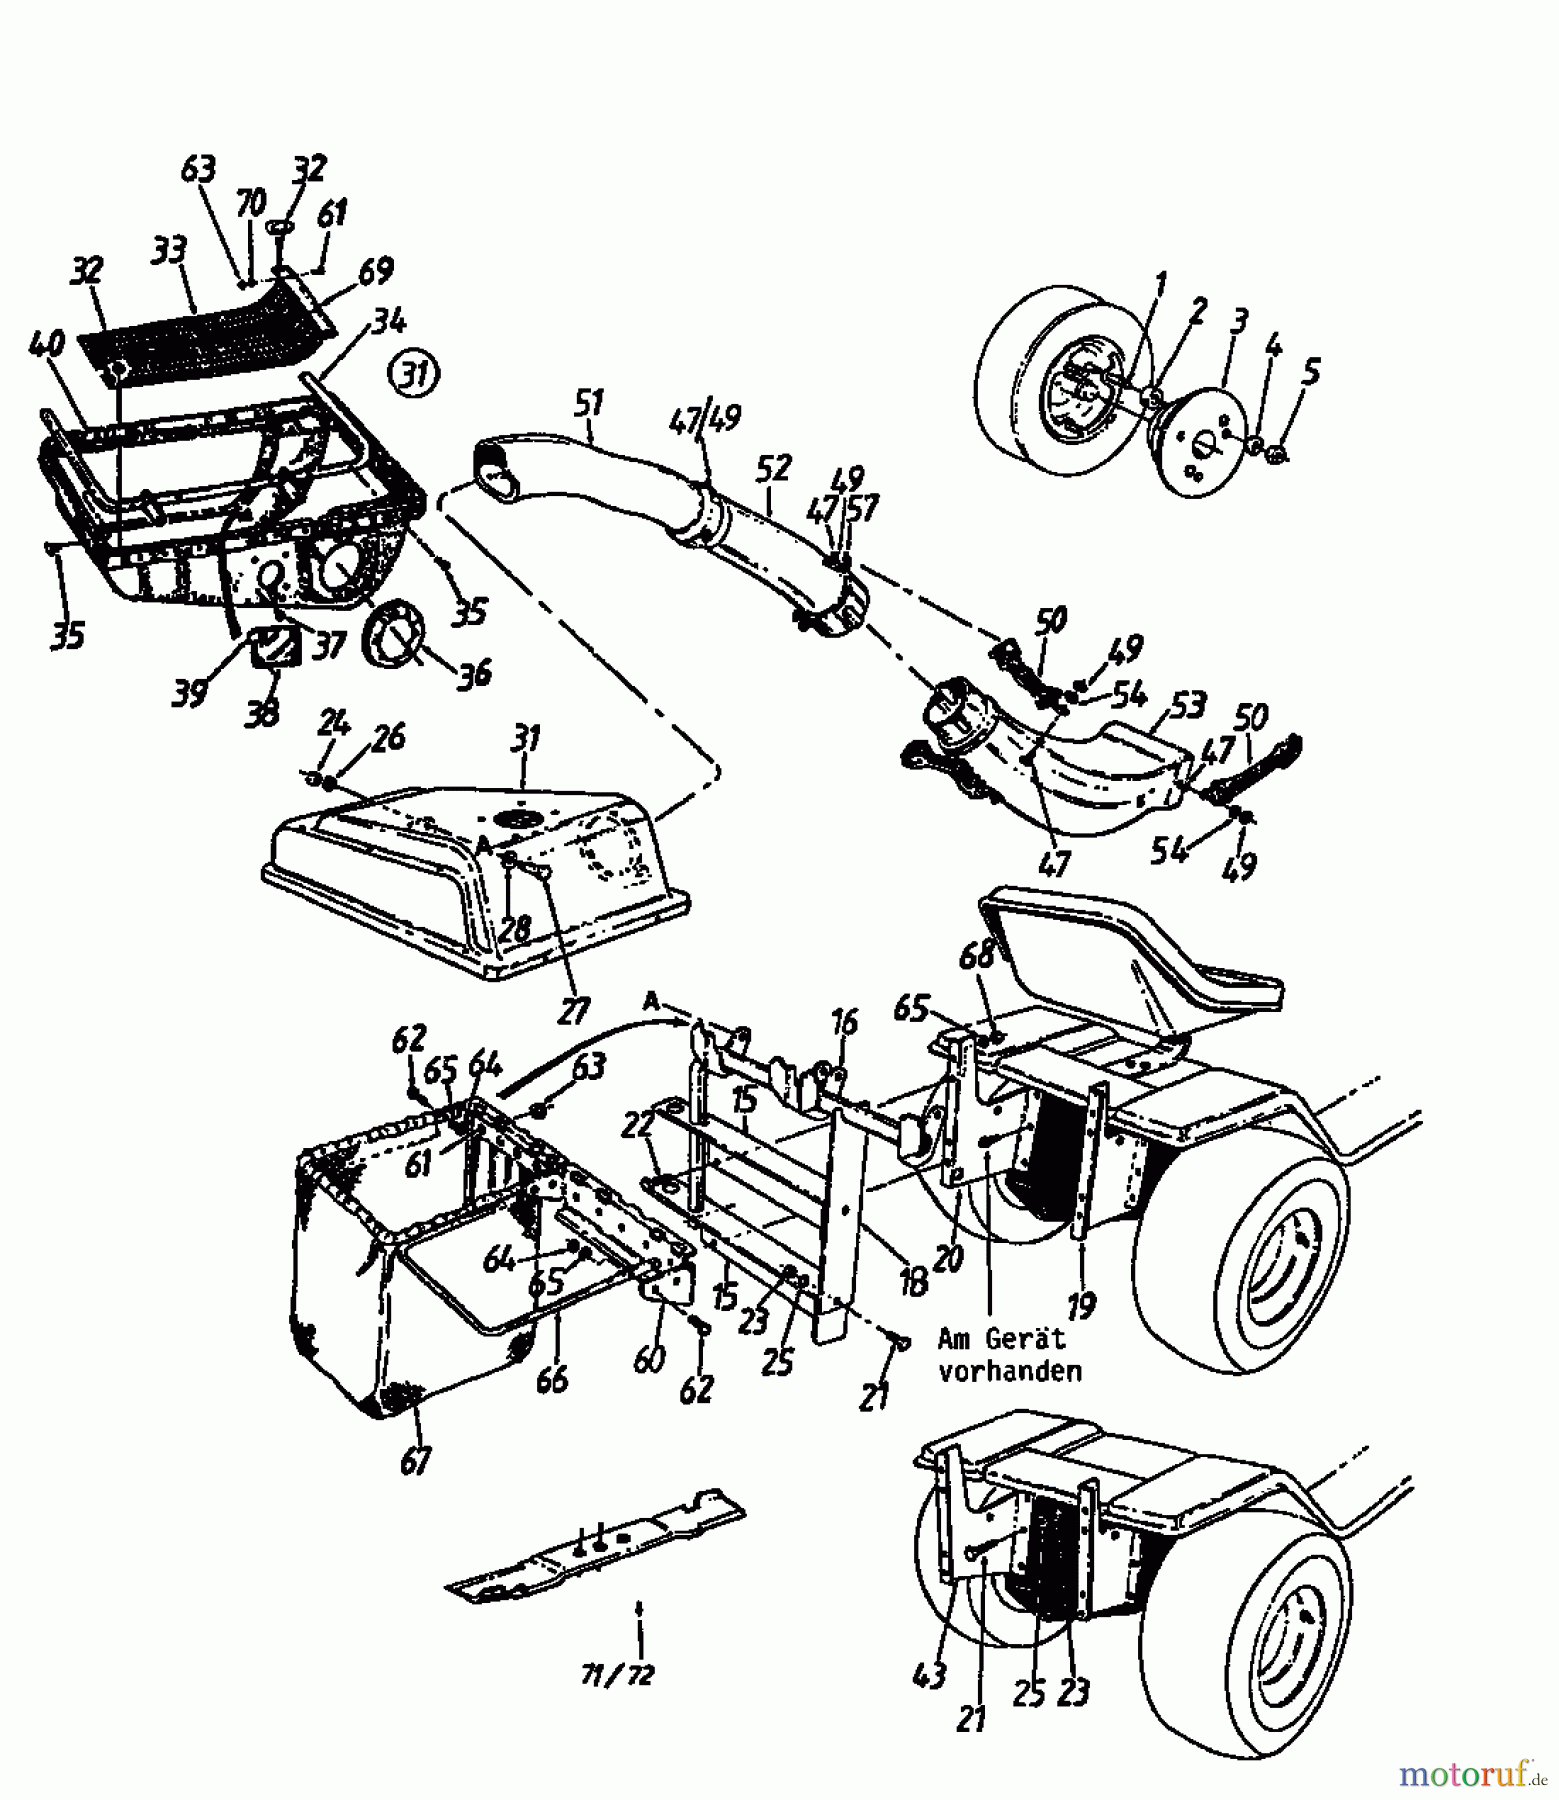  MTD Accessories Accessories garden and lawn tractors Grass catcher for 400 series 190-0640  (1990) Basic machine